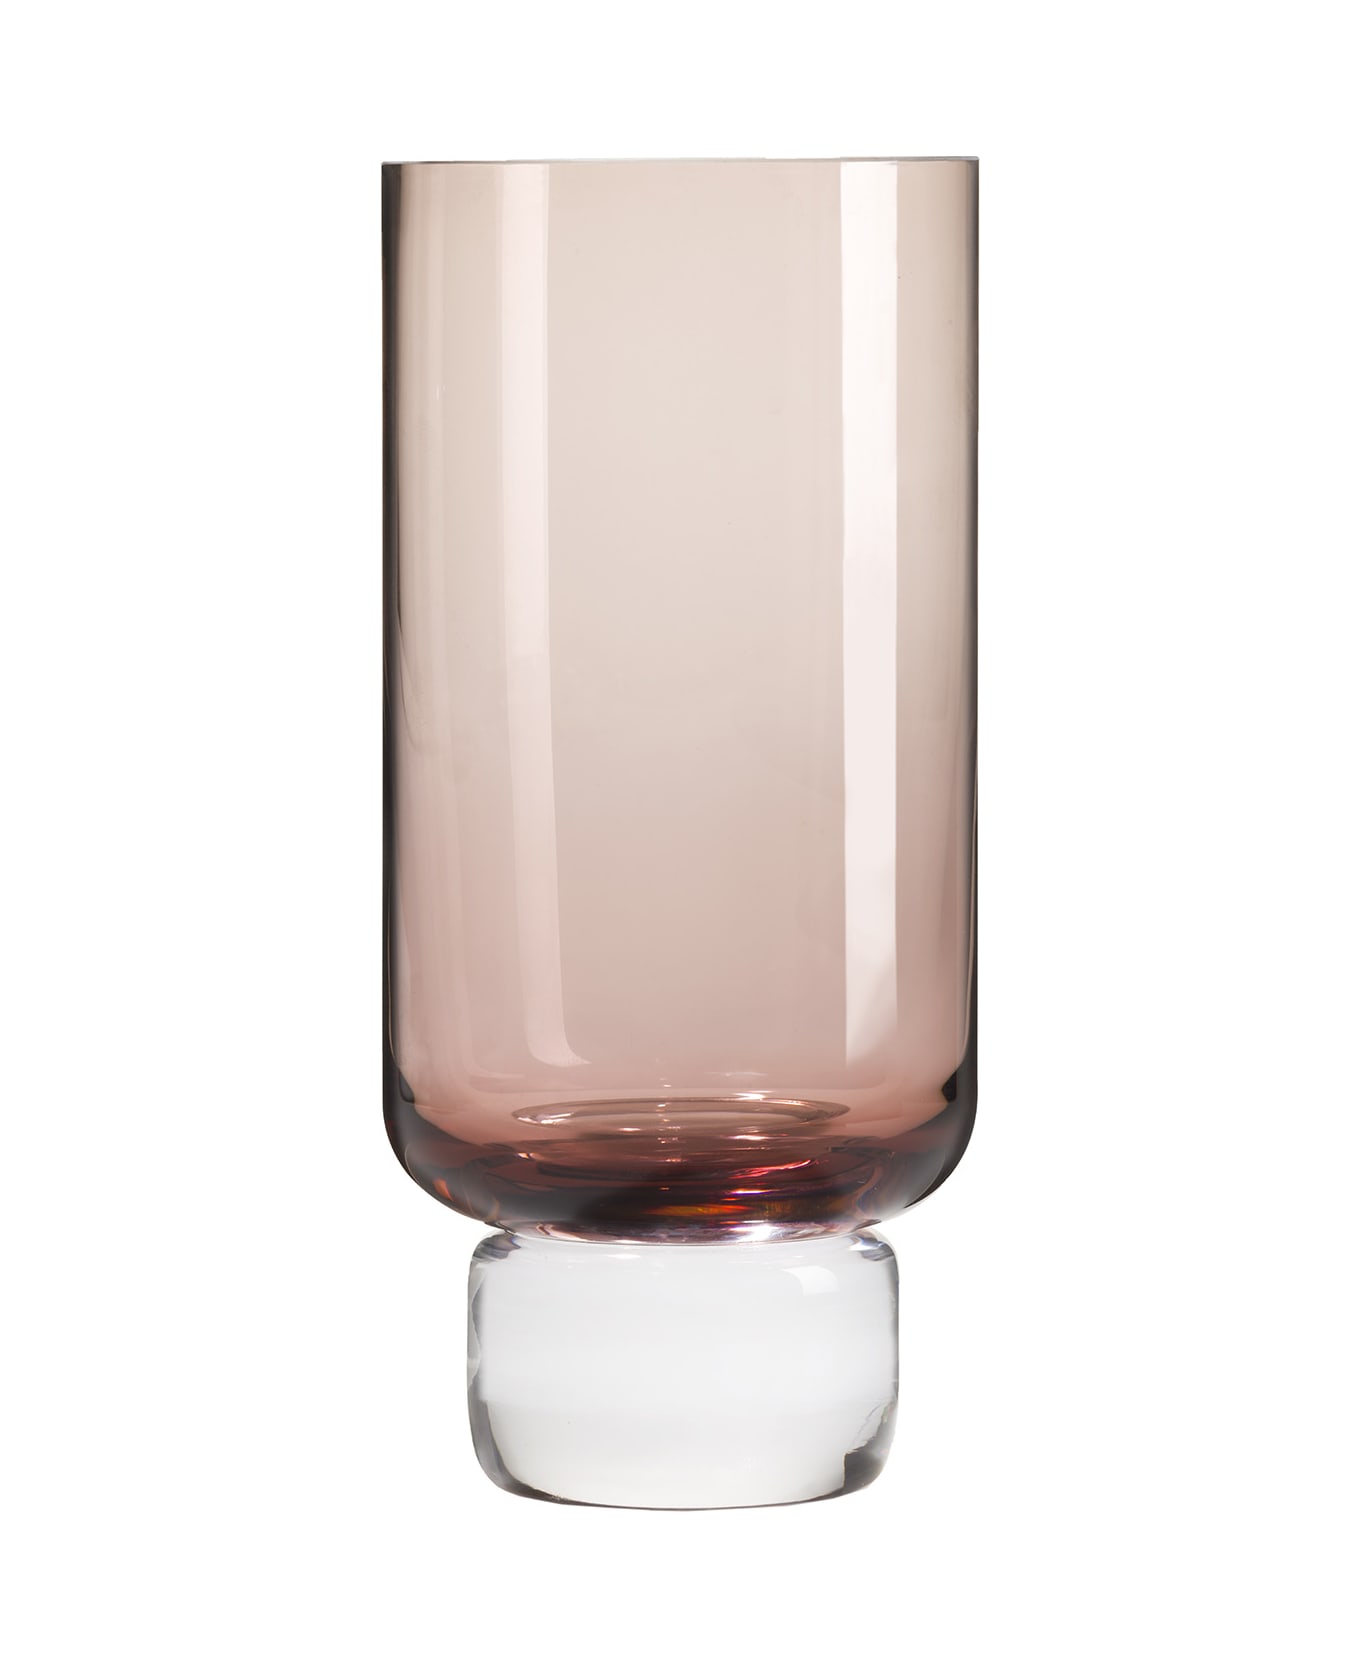 Karakter Clessidra Jar In Bordeaux Glass - bordeaux